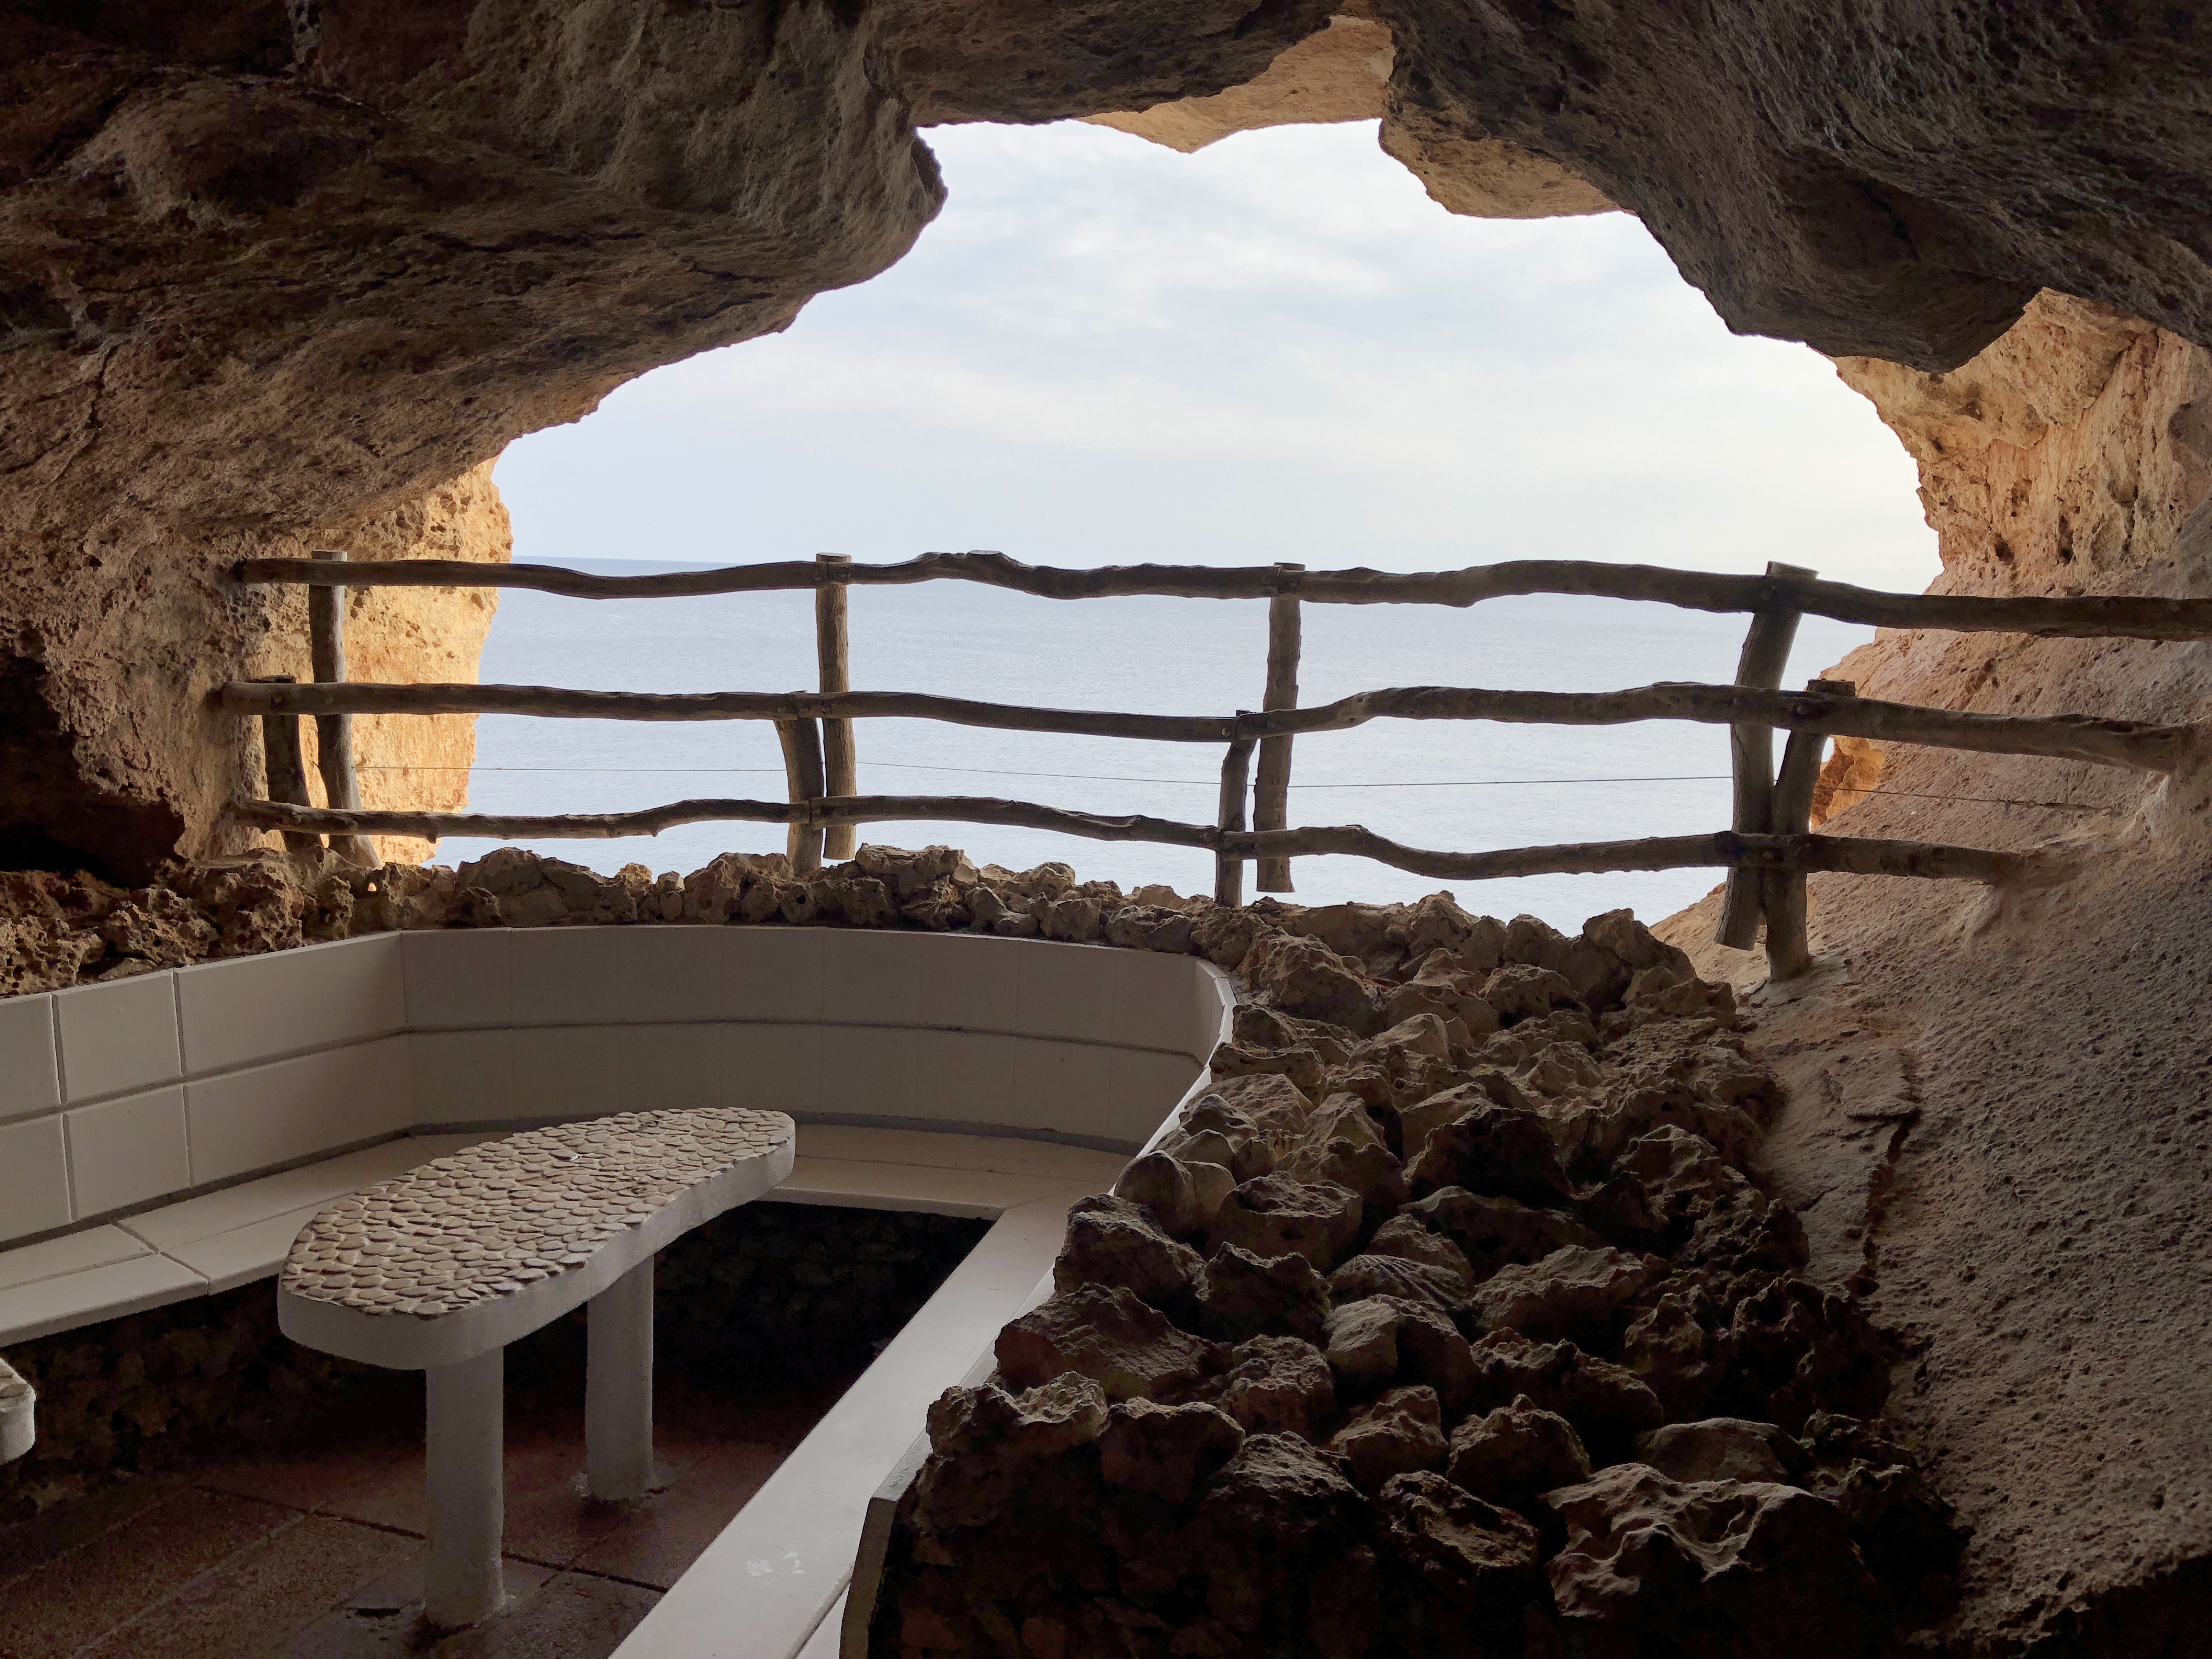 Menorca: Cova d'en Xoroi